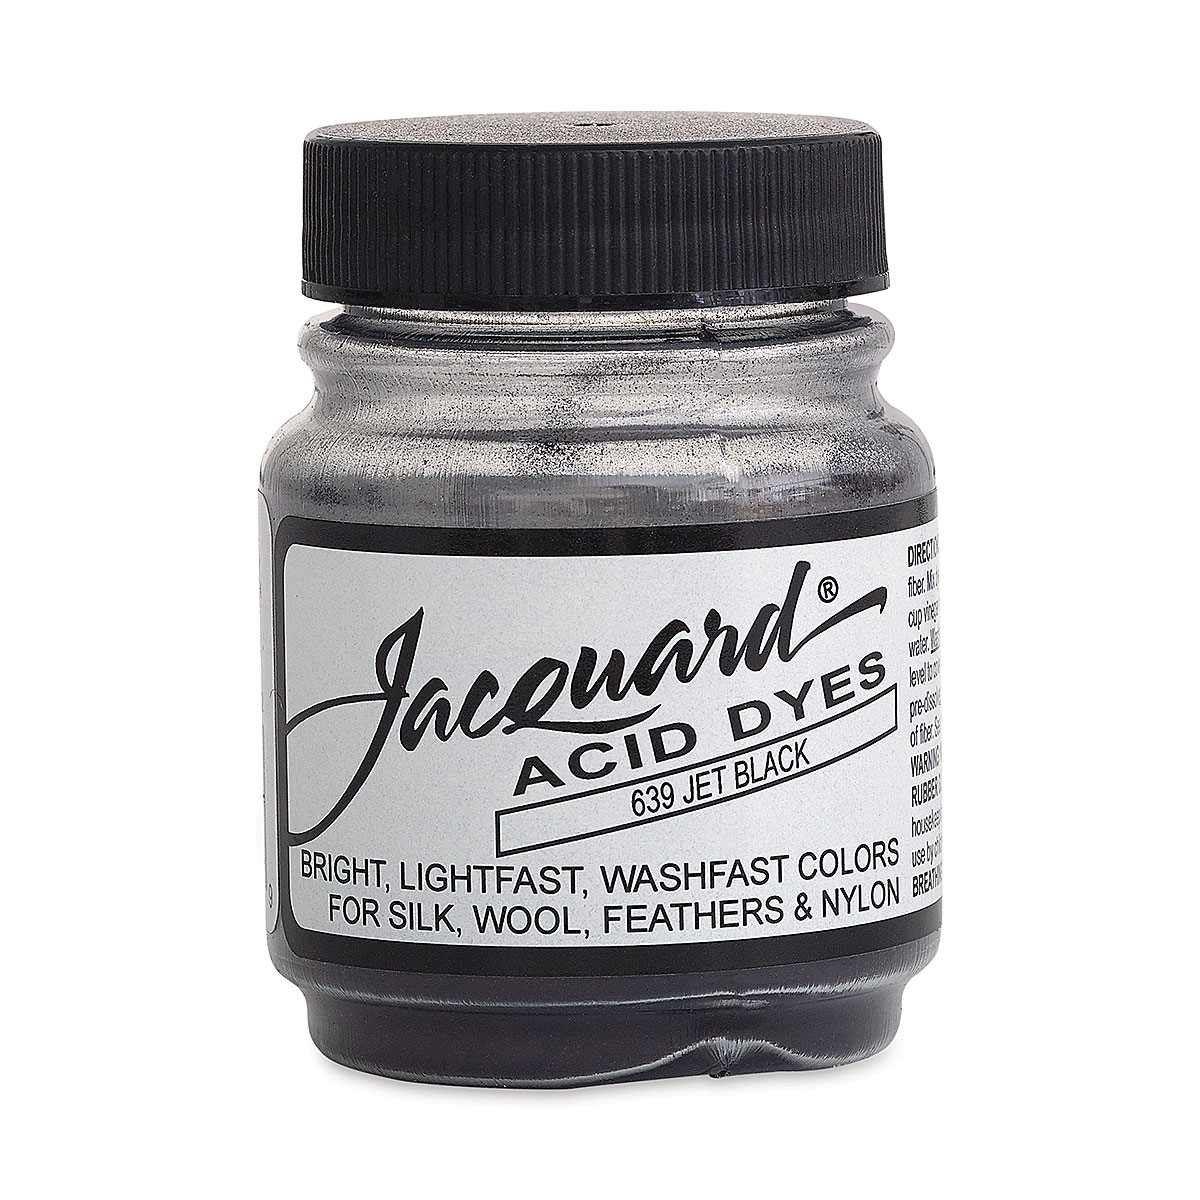 Jacquard Acid Dyes Jet Black